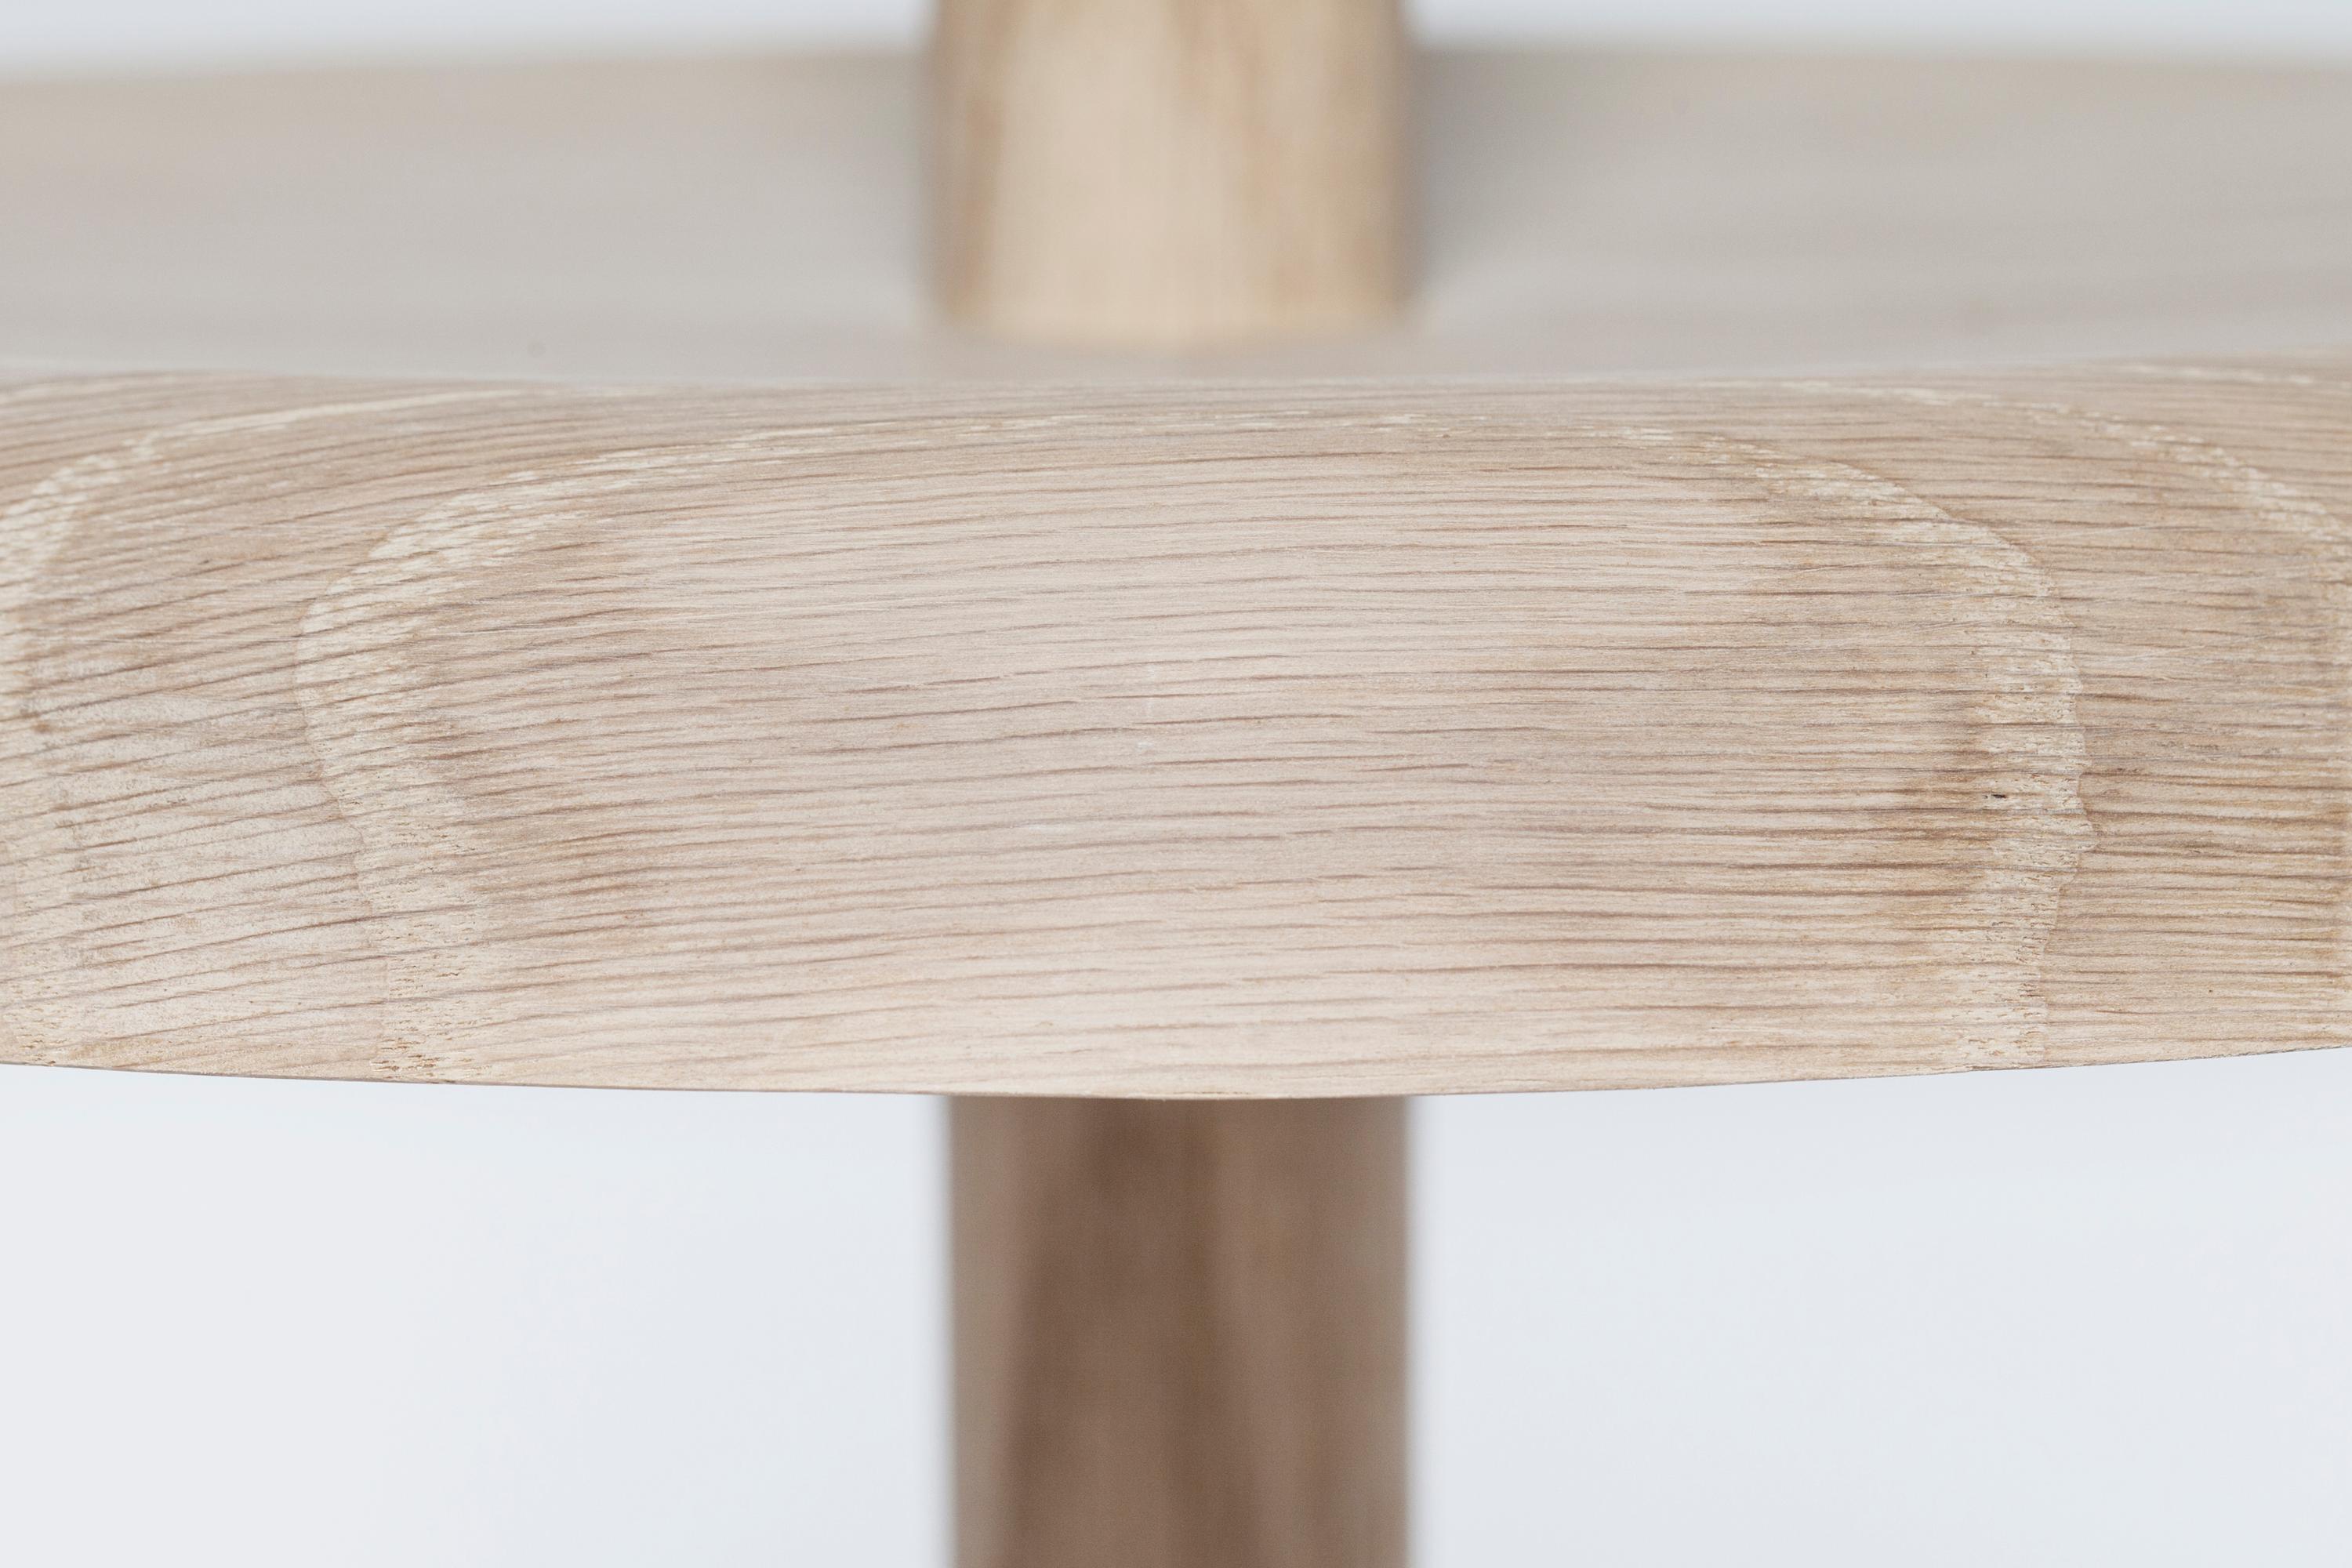 Contemporary Handmade Scandinavian Side Table or Stool 